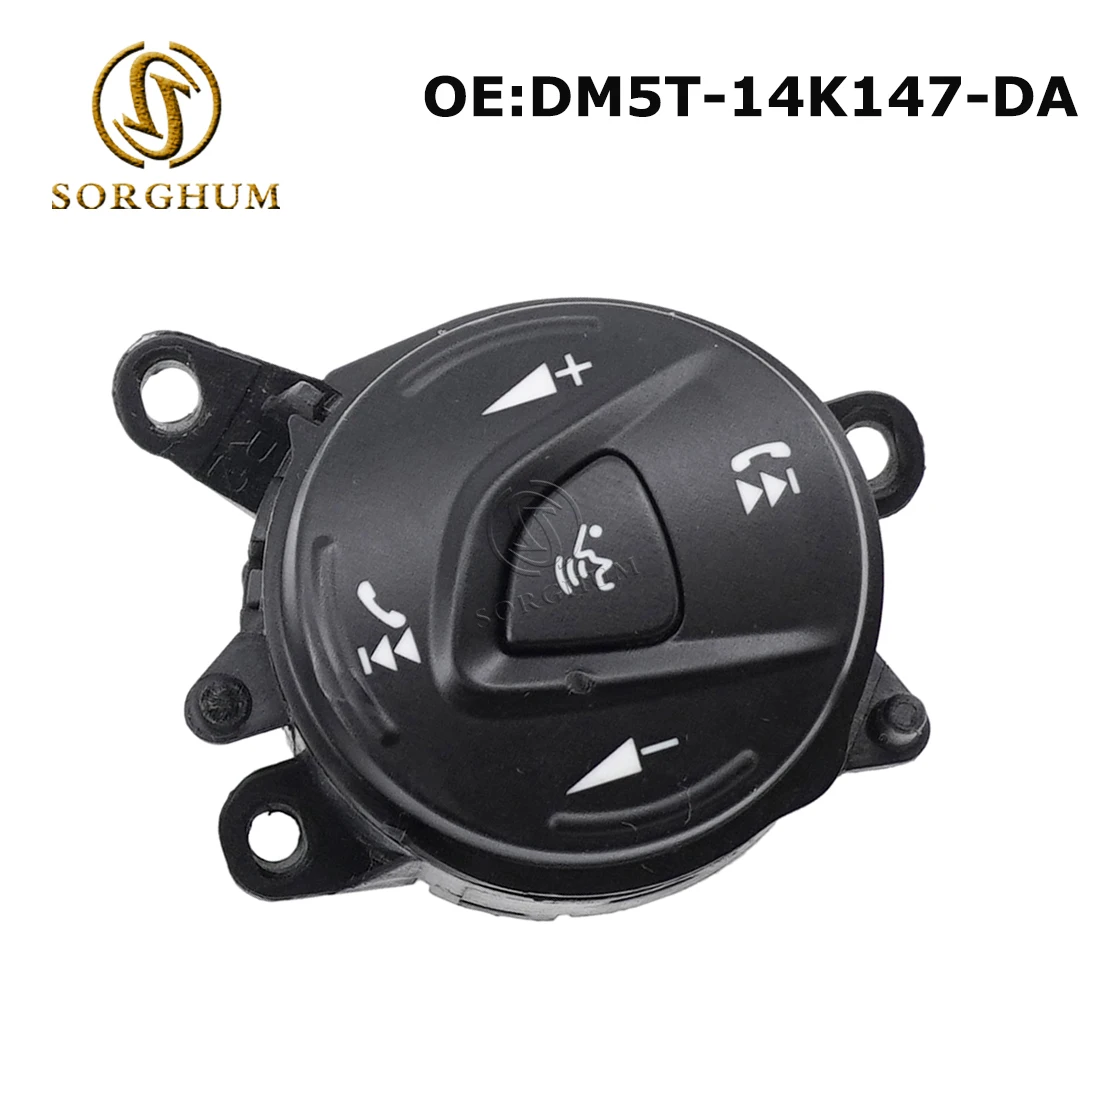 

Sorghum DM5T-14K147-DA DM5T14K147DA Steering Wheel Radio Voice Control Switch Button For 2012-2016 Ford Focus Kuga Escape